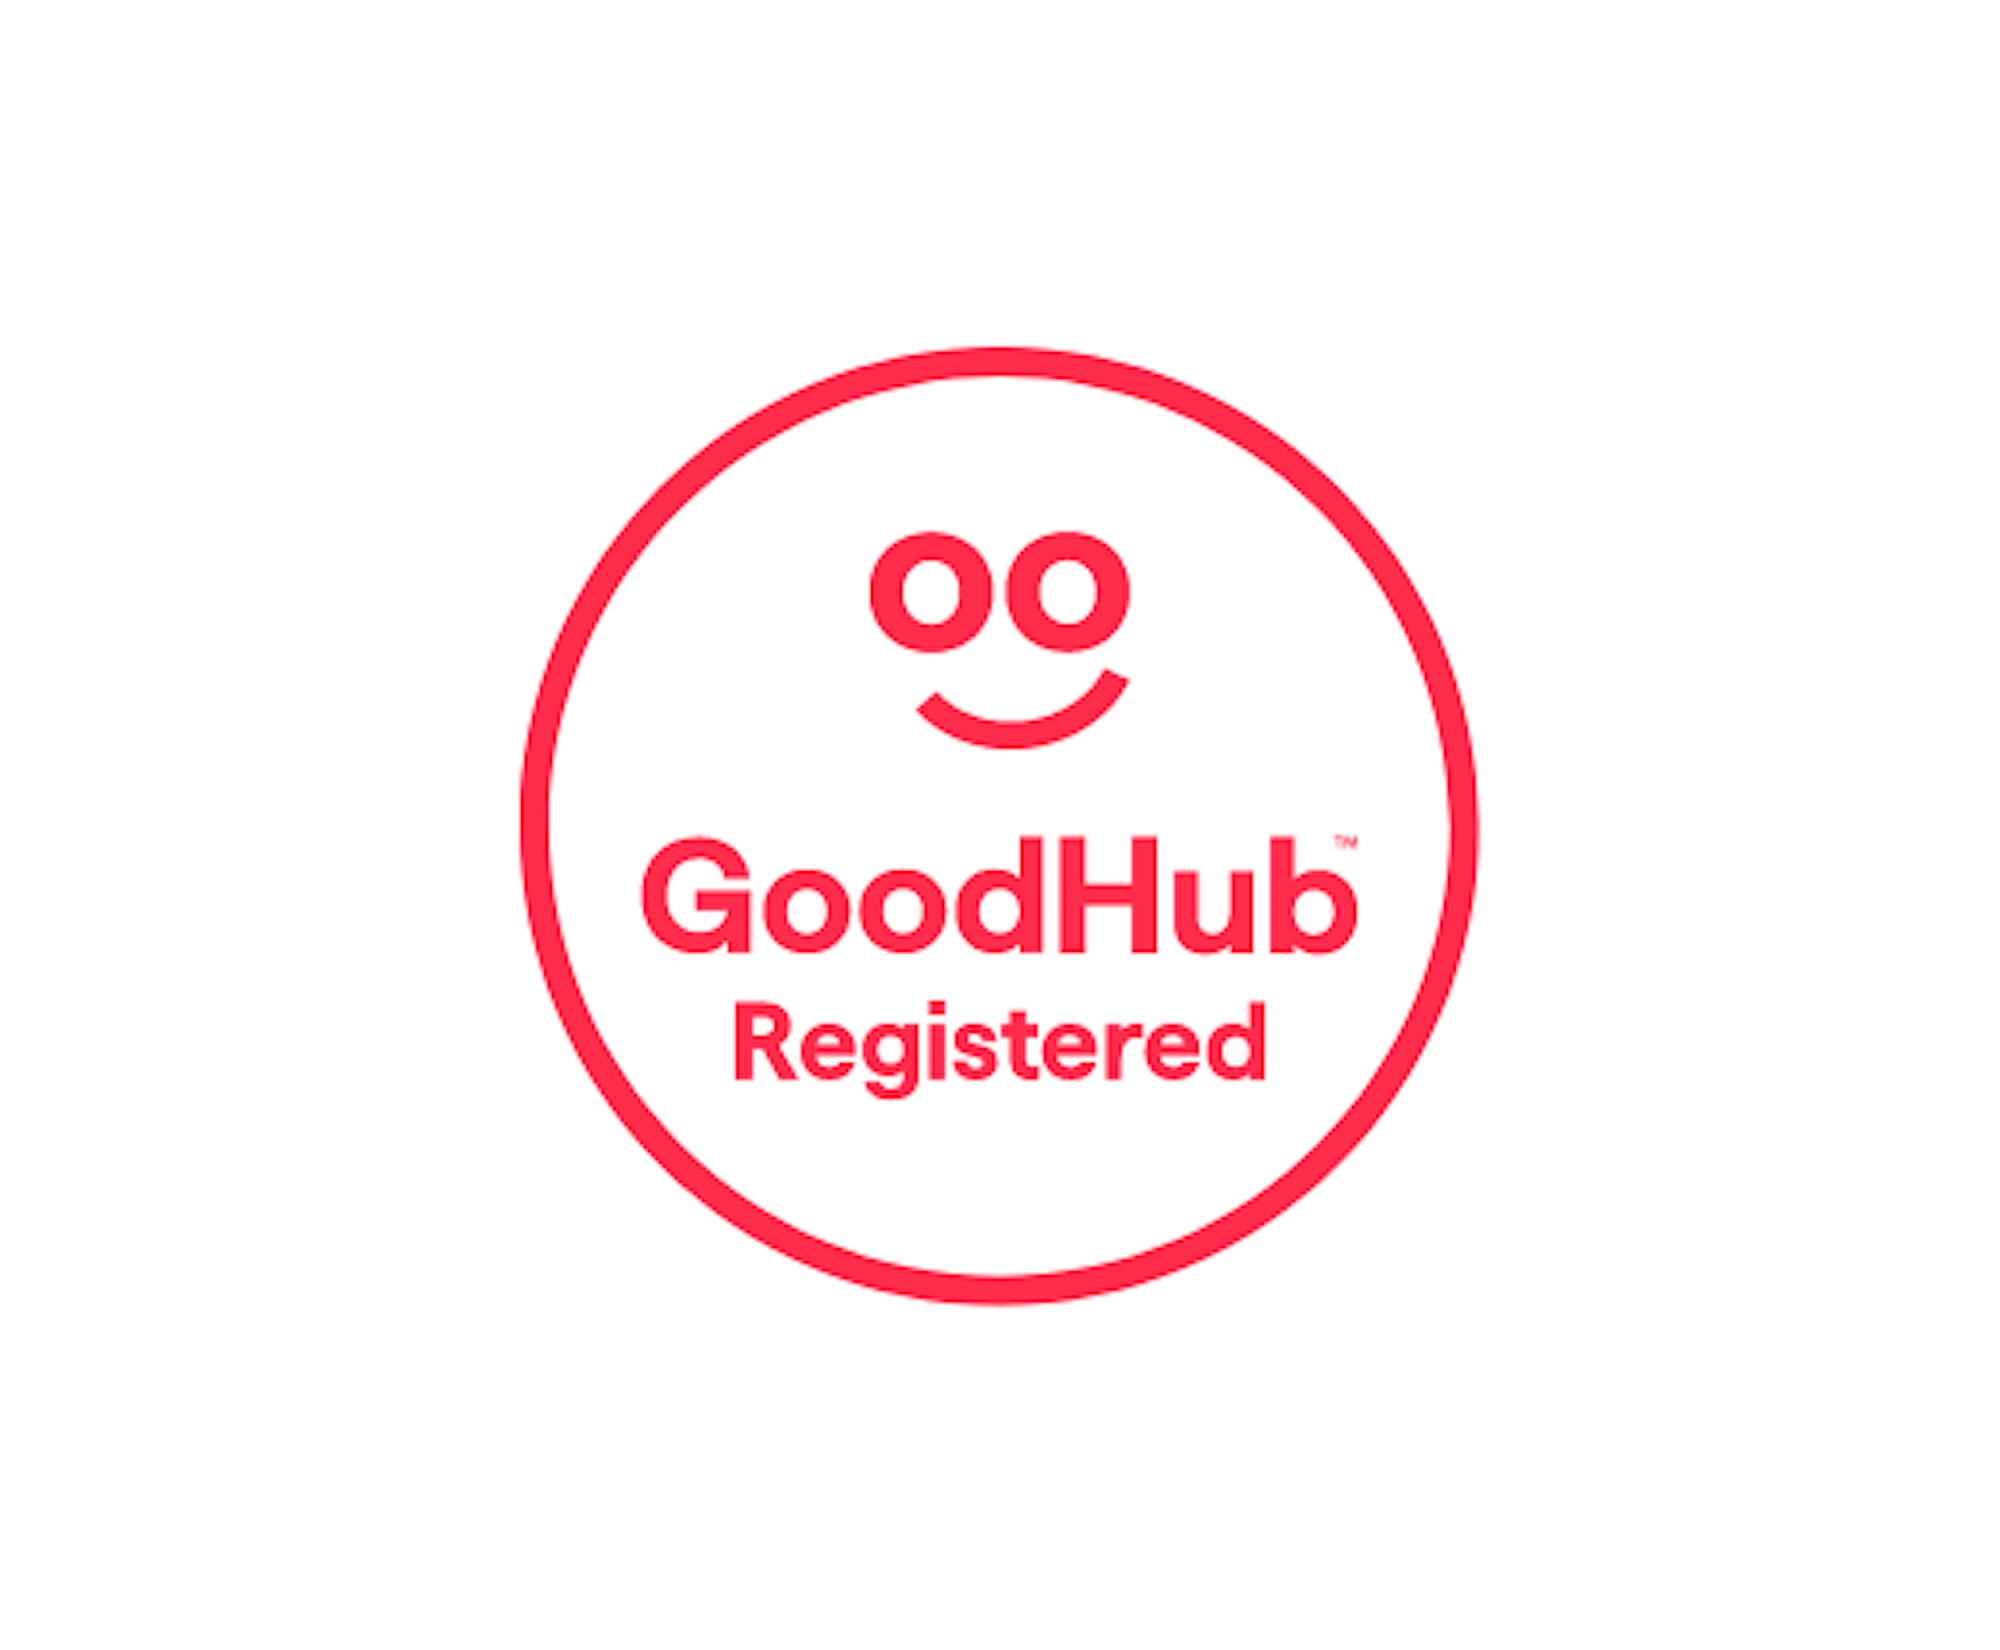 GoodHub registered badge